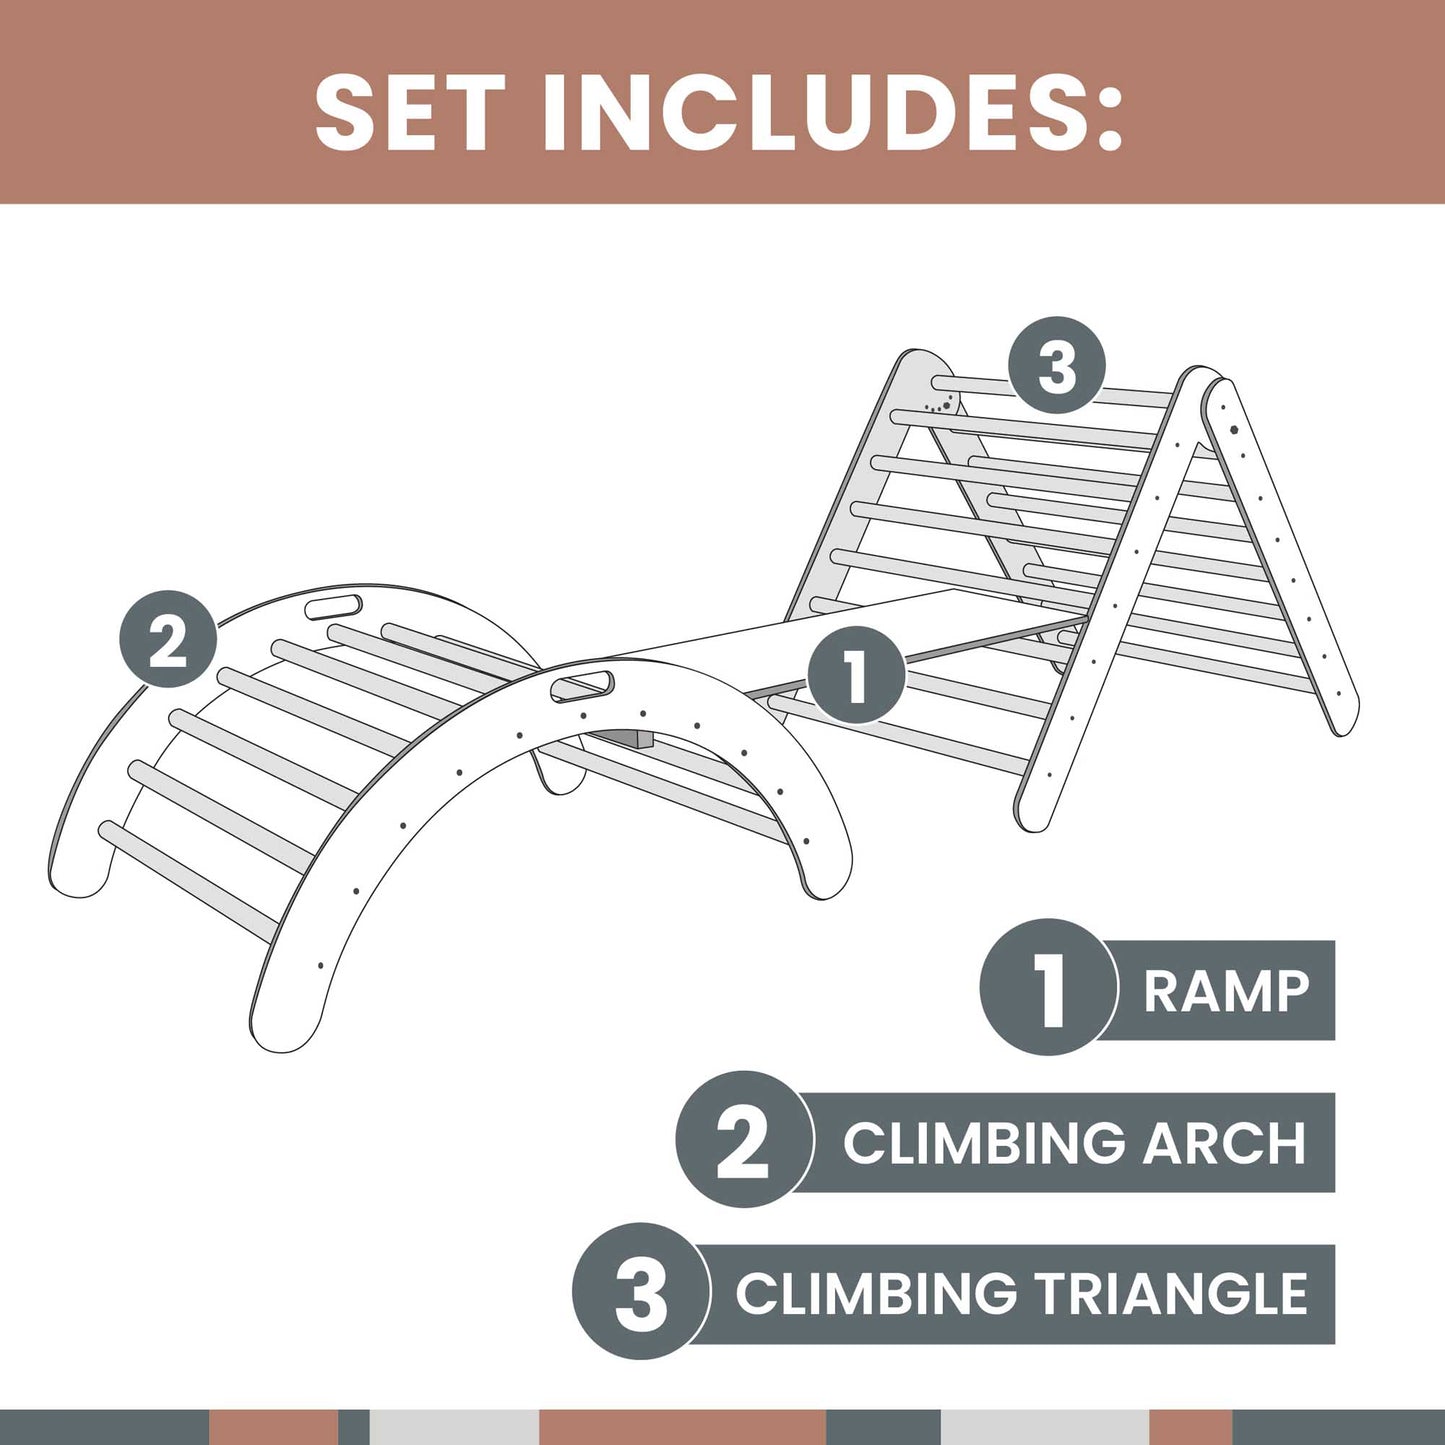 Climbing arch + Foldable climbing triangle + a ramp